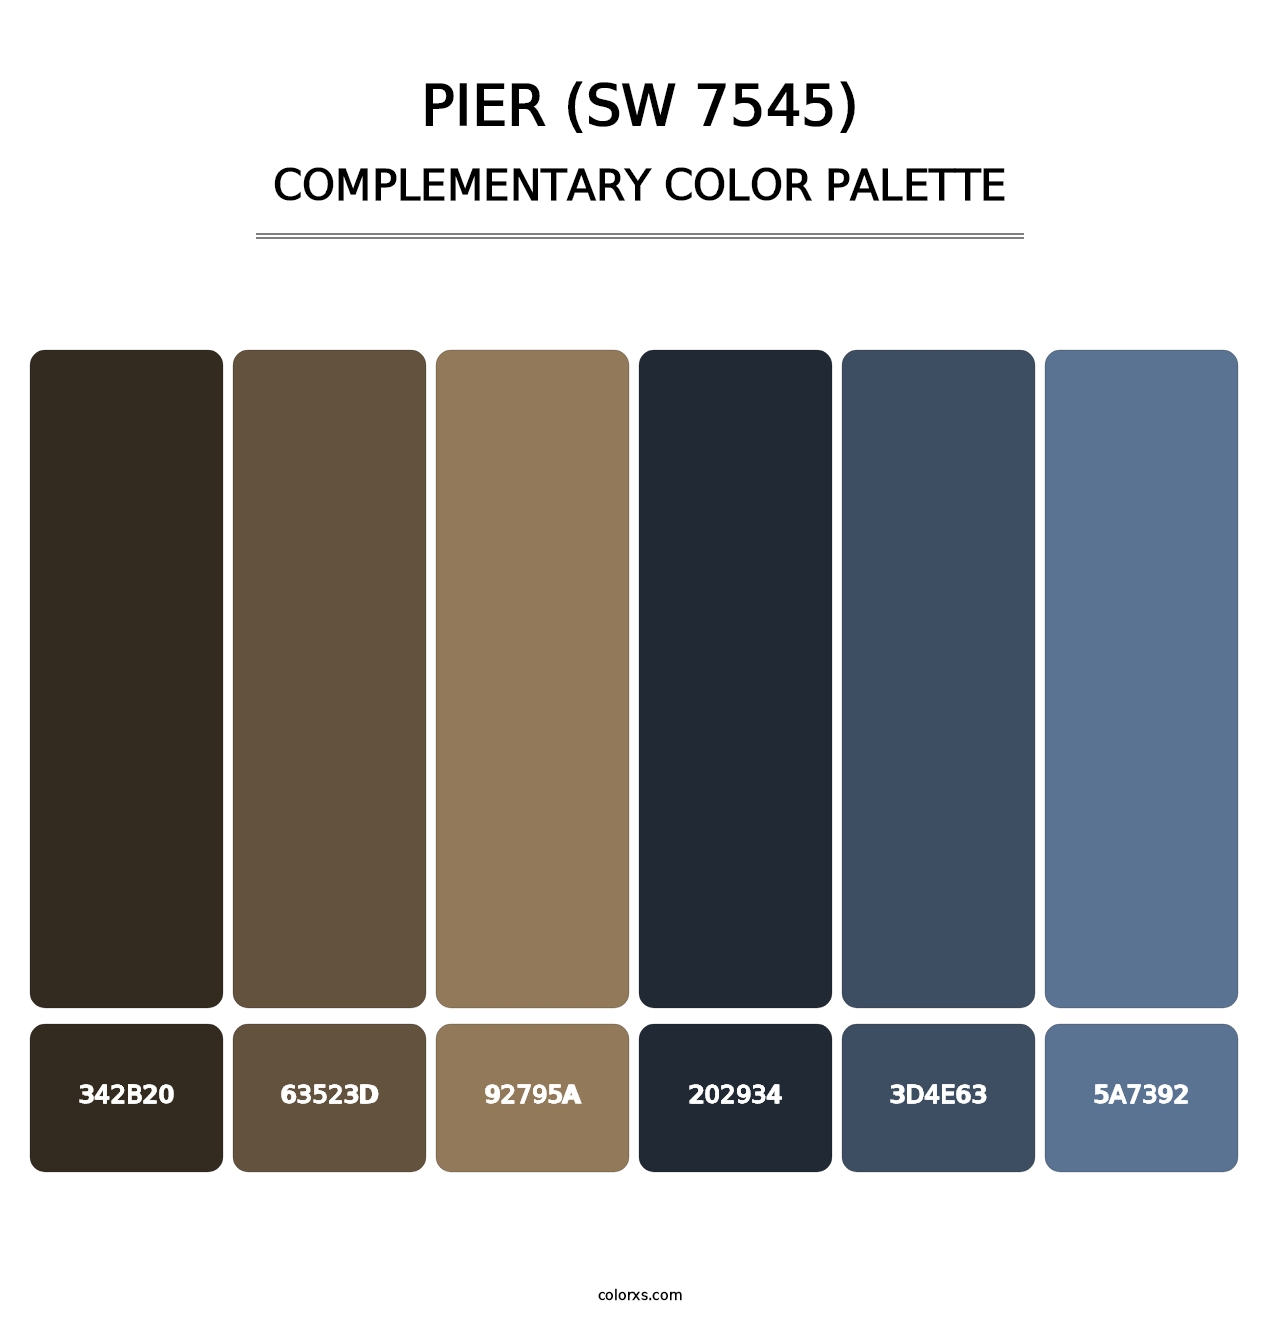 Pier (SW 7545) - Complementary Color Palette